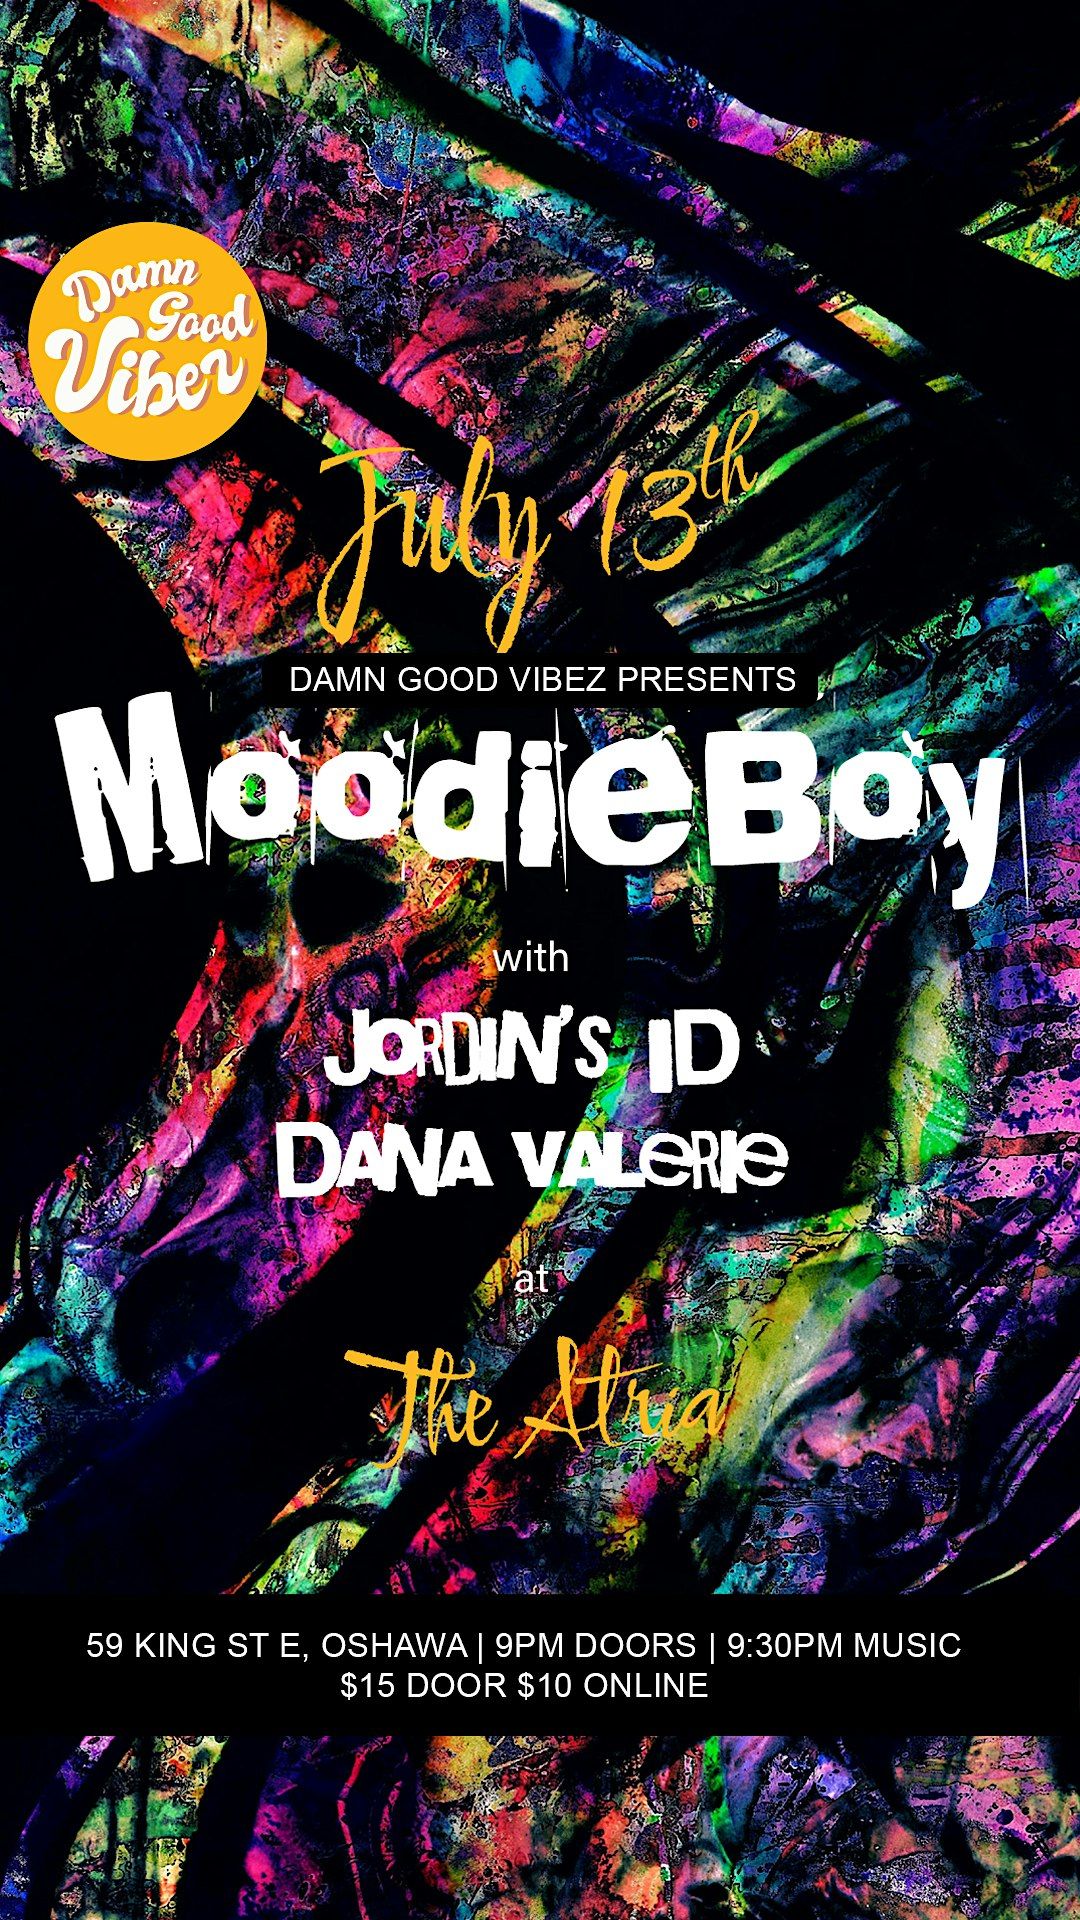 Moodie Boy, Jordin's Id, and Dana Valerie at The Atria